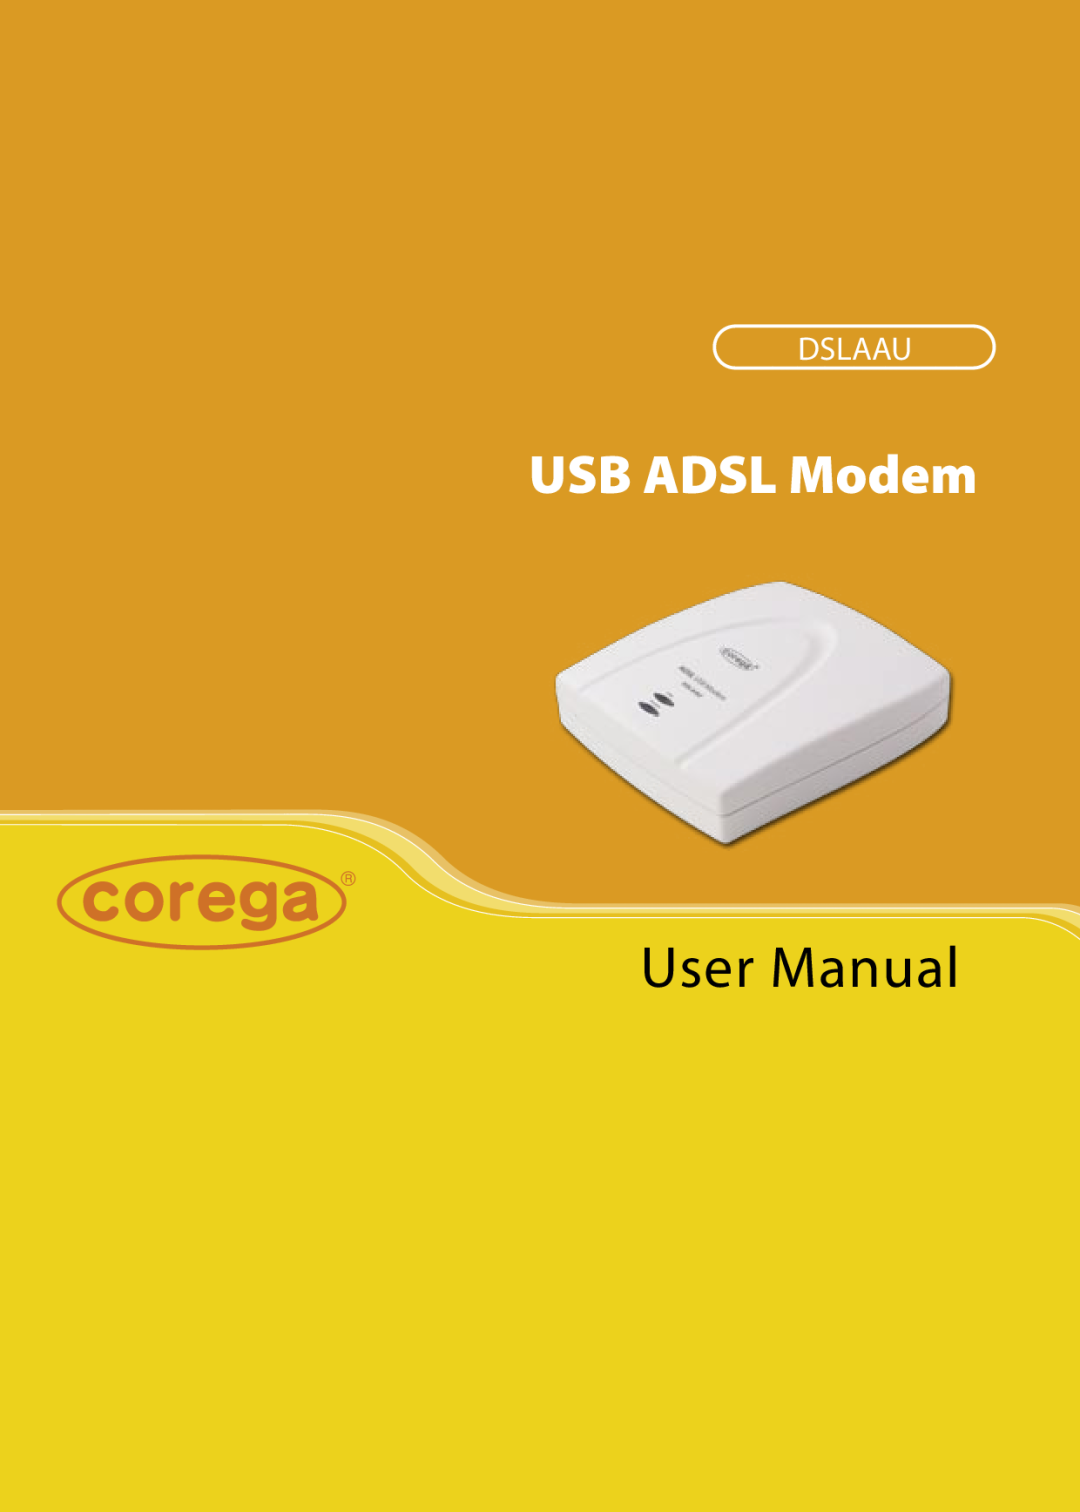 Corega DSLAAU user manual User Manual, USB ADSL Modem, Dslaau 